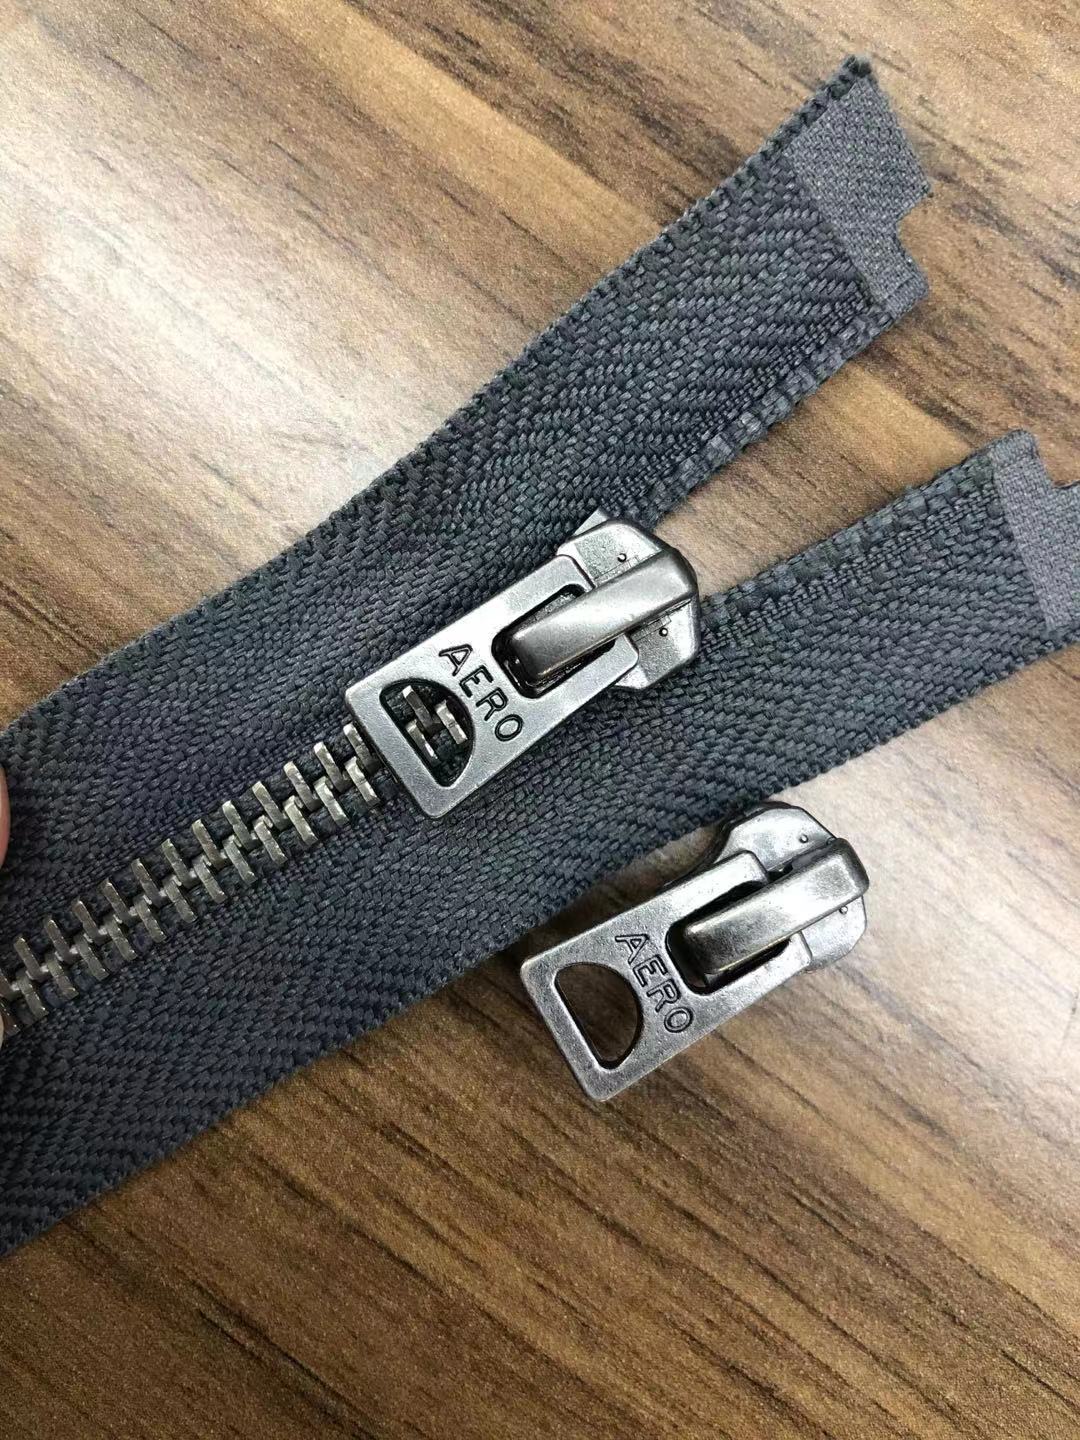 How Do Zipper Works?